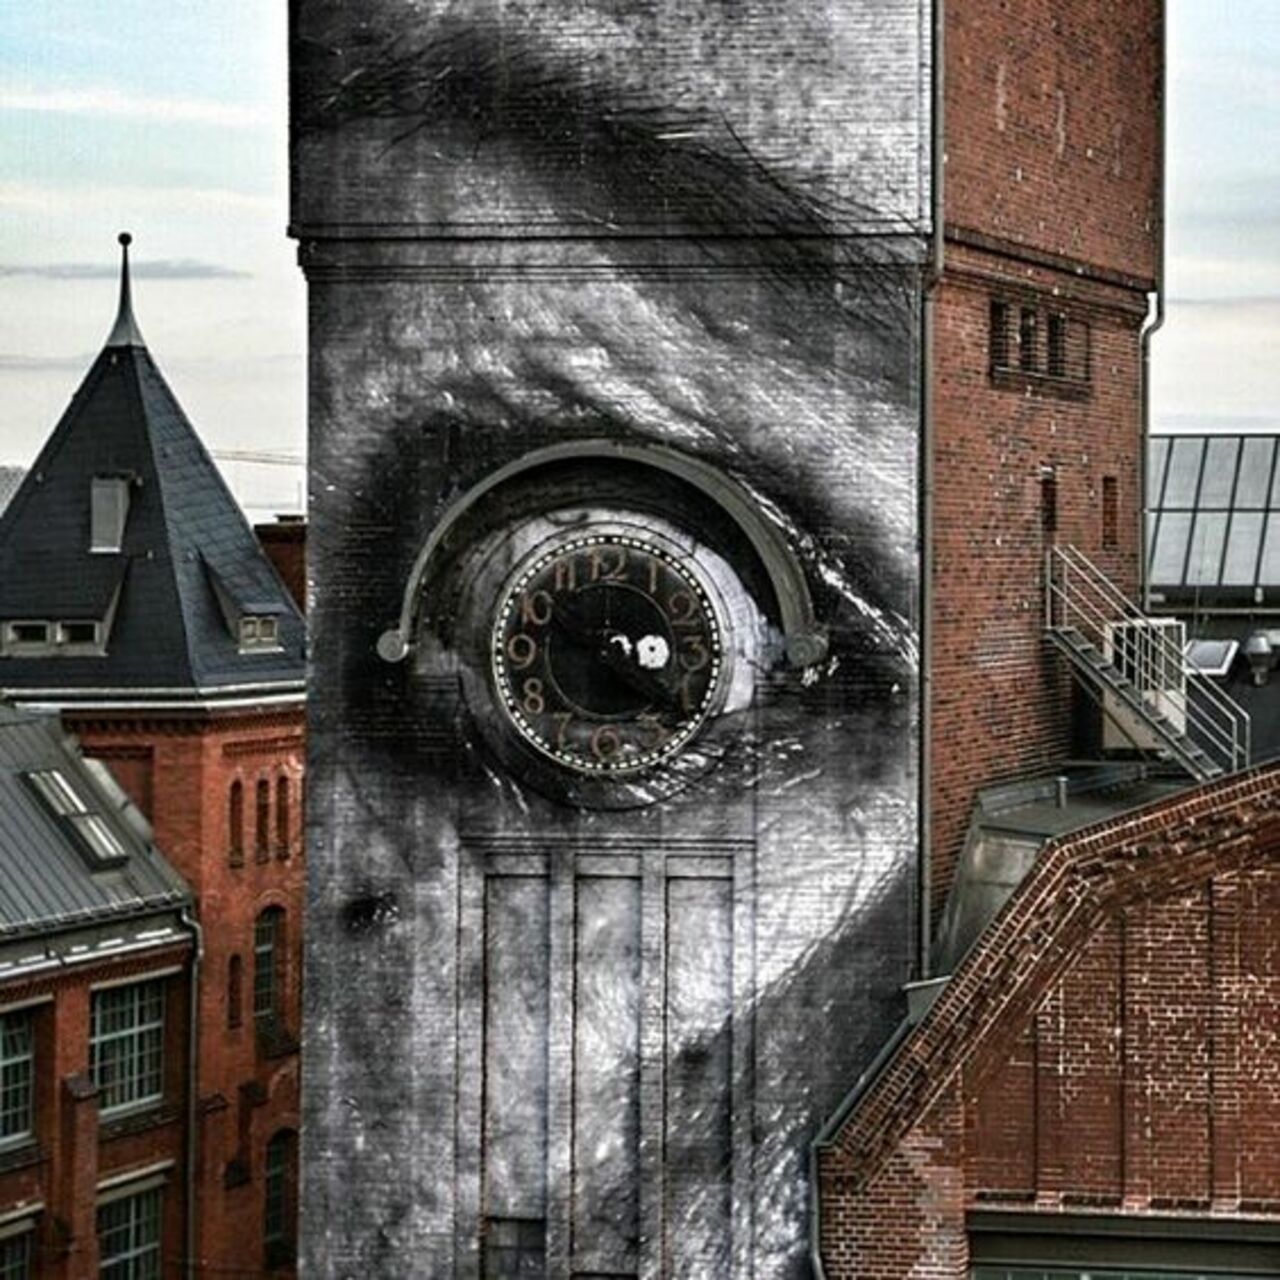 Clockwork Germanica          •         #streetart #graffiti #Germany #art  . : https://t.co/YfjoPnT9xq